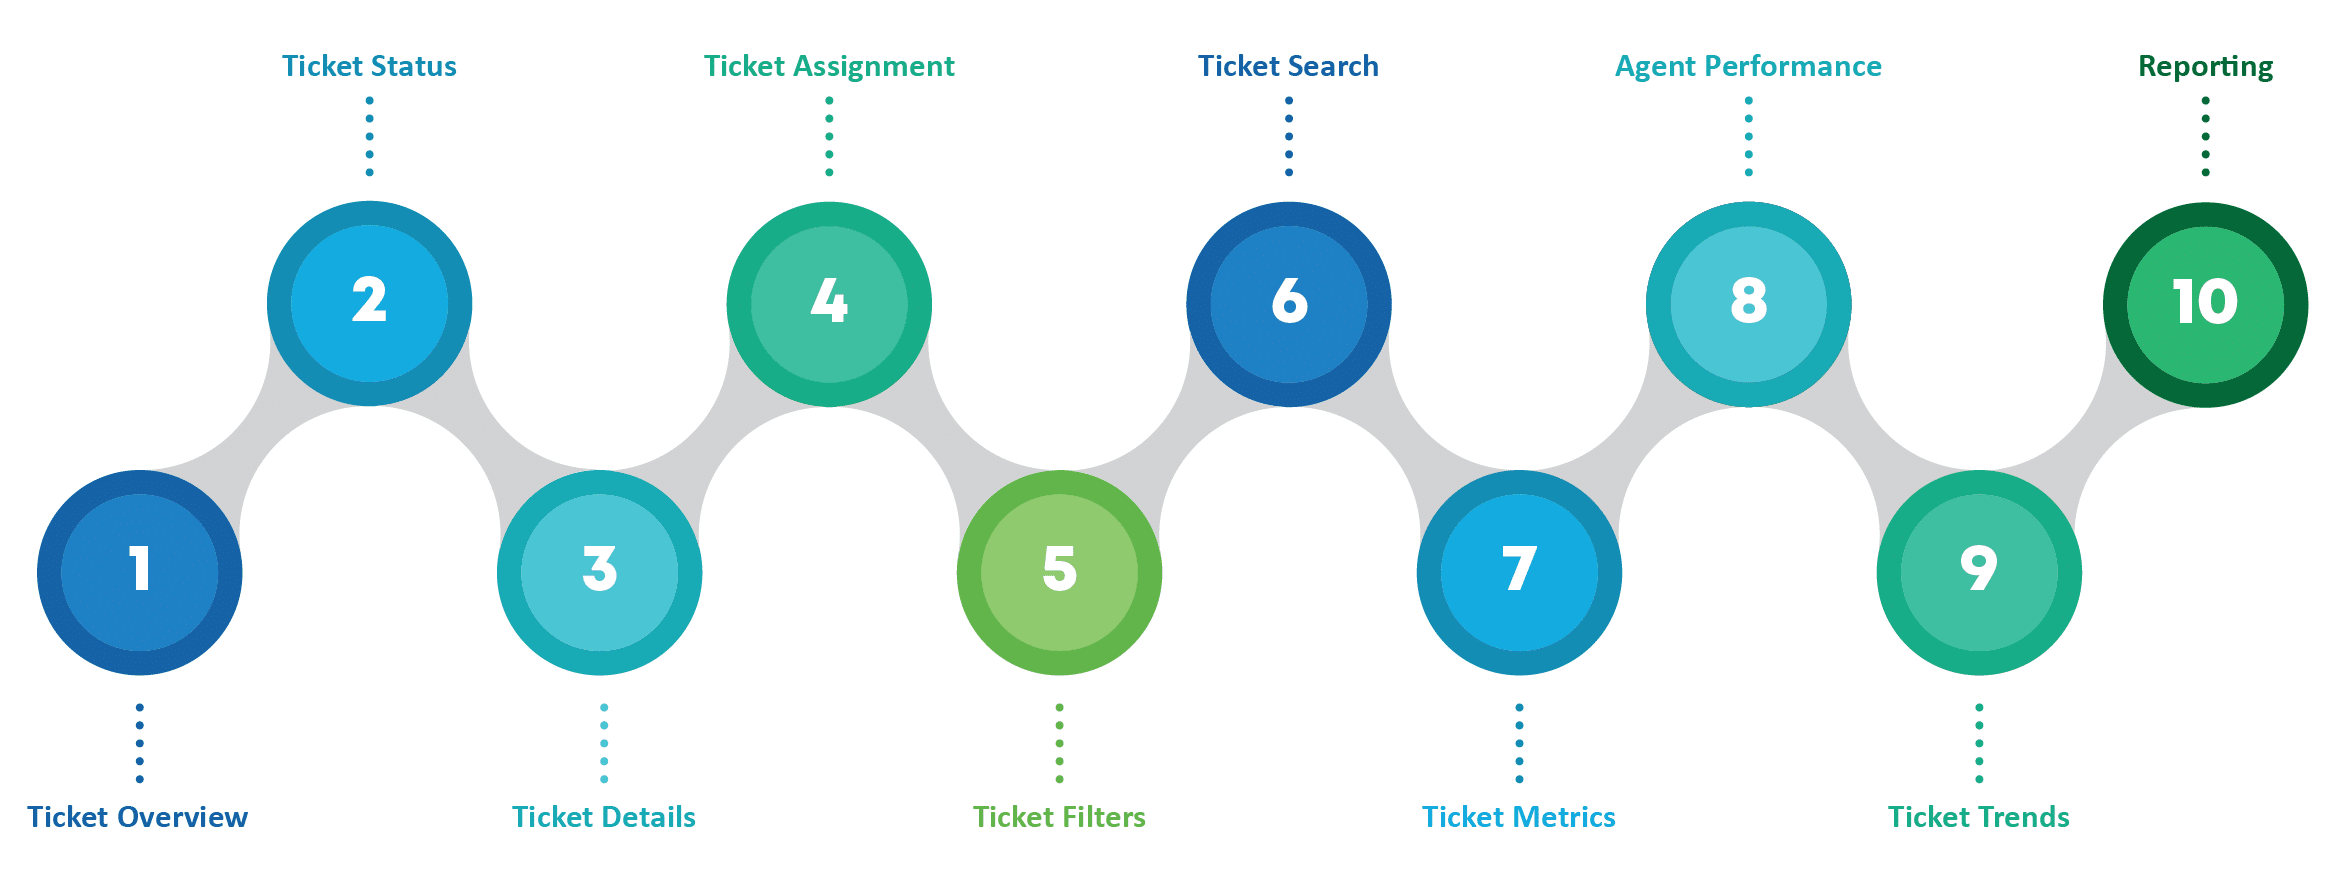 February Newsletter Ticketing Management Inforgraphic Image